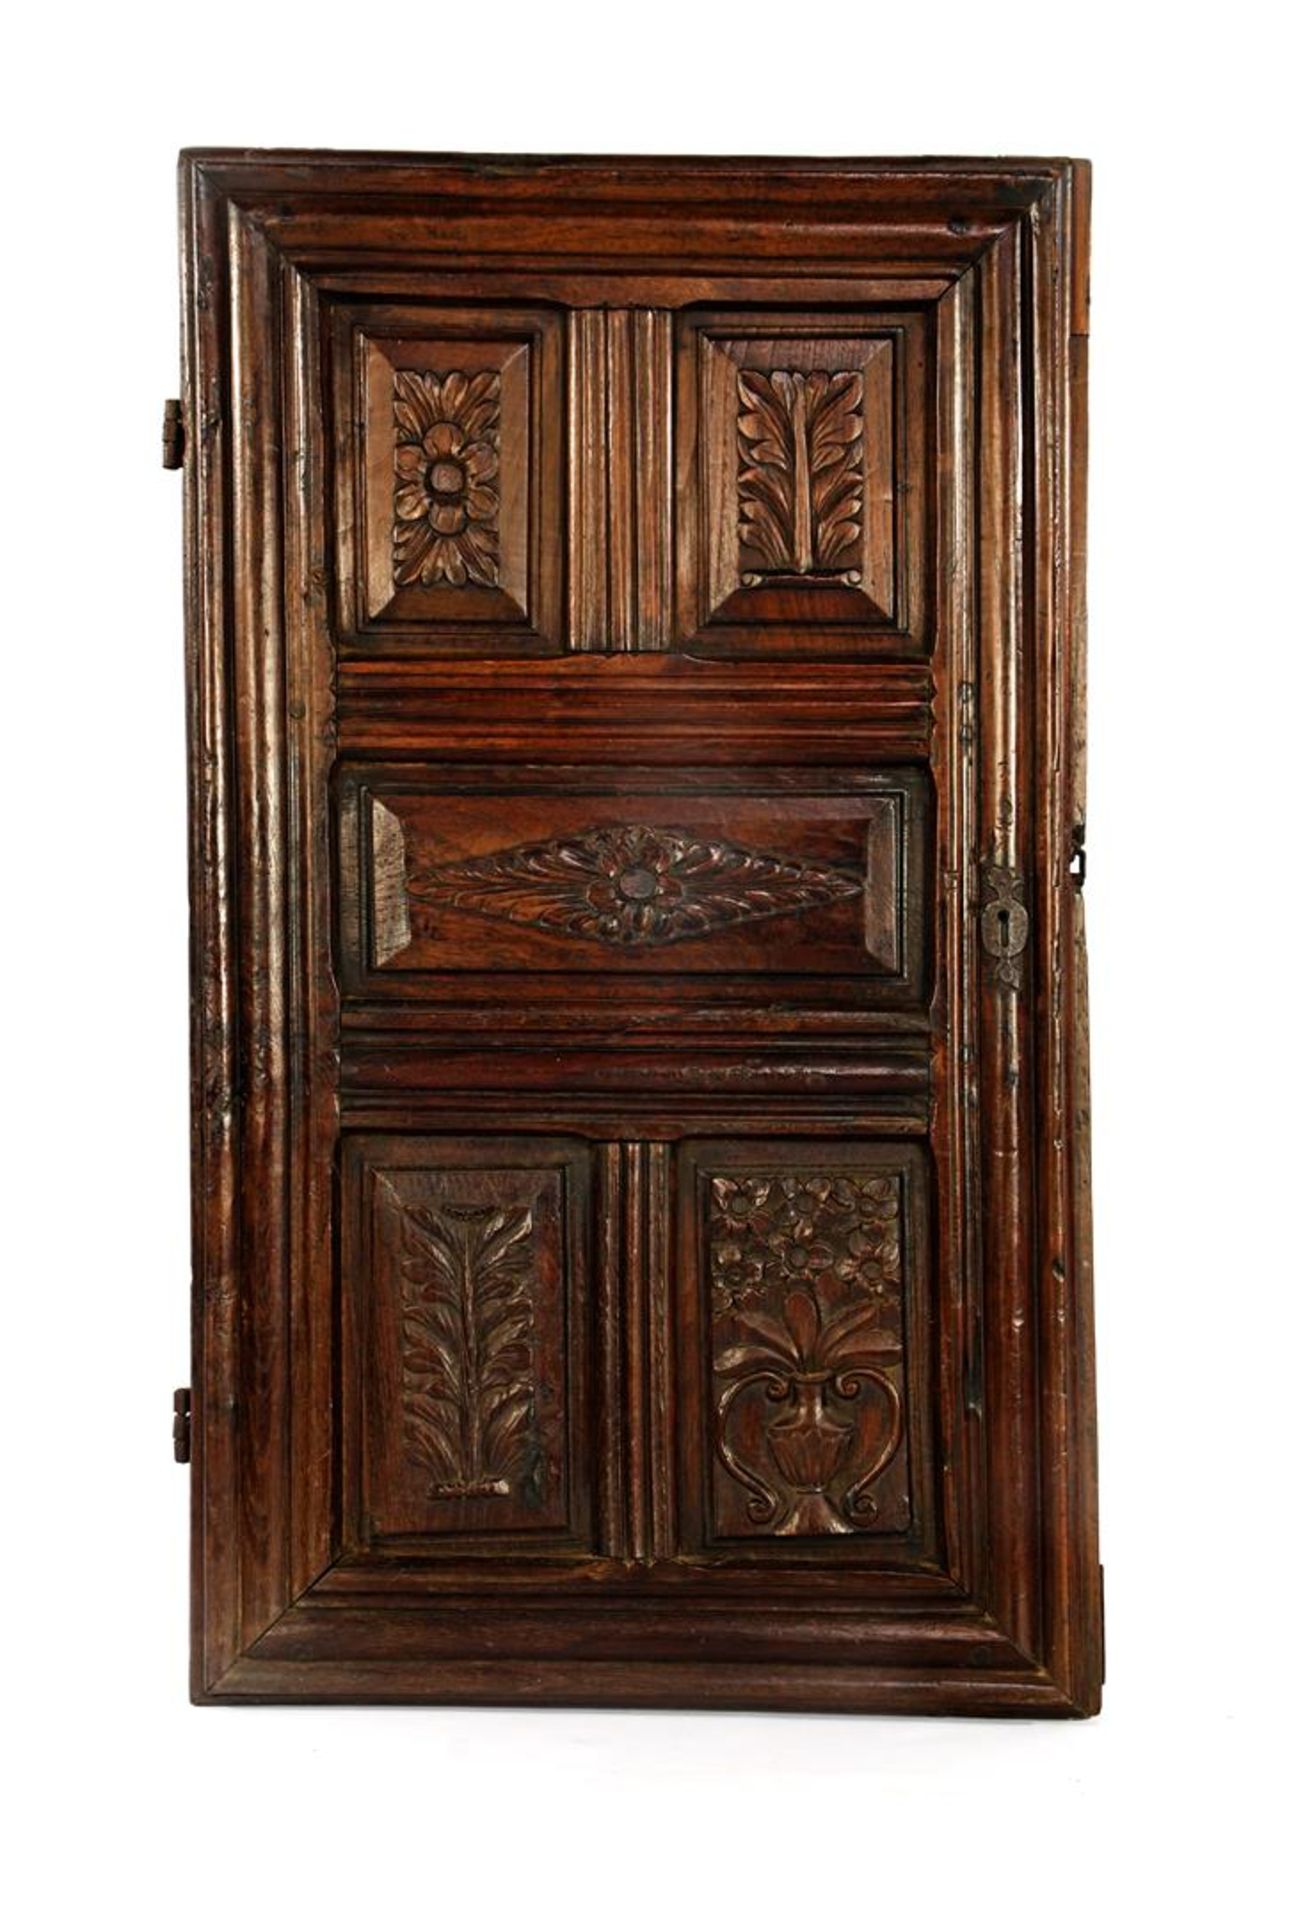 2 antique doors of a cupboard - Image 5 of 6